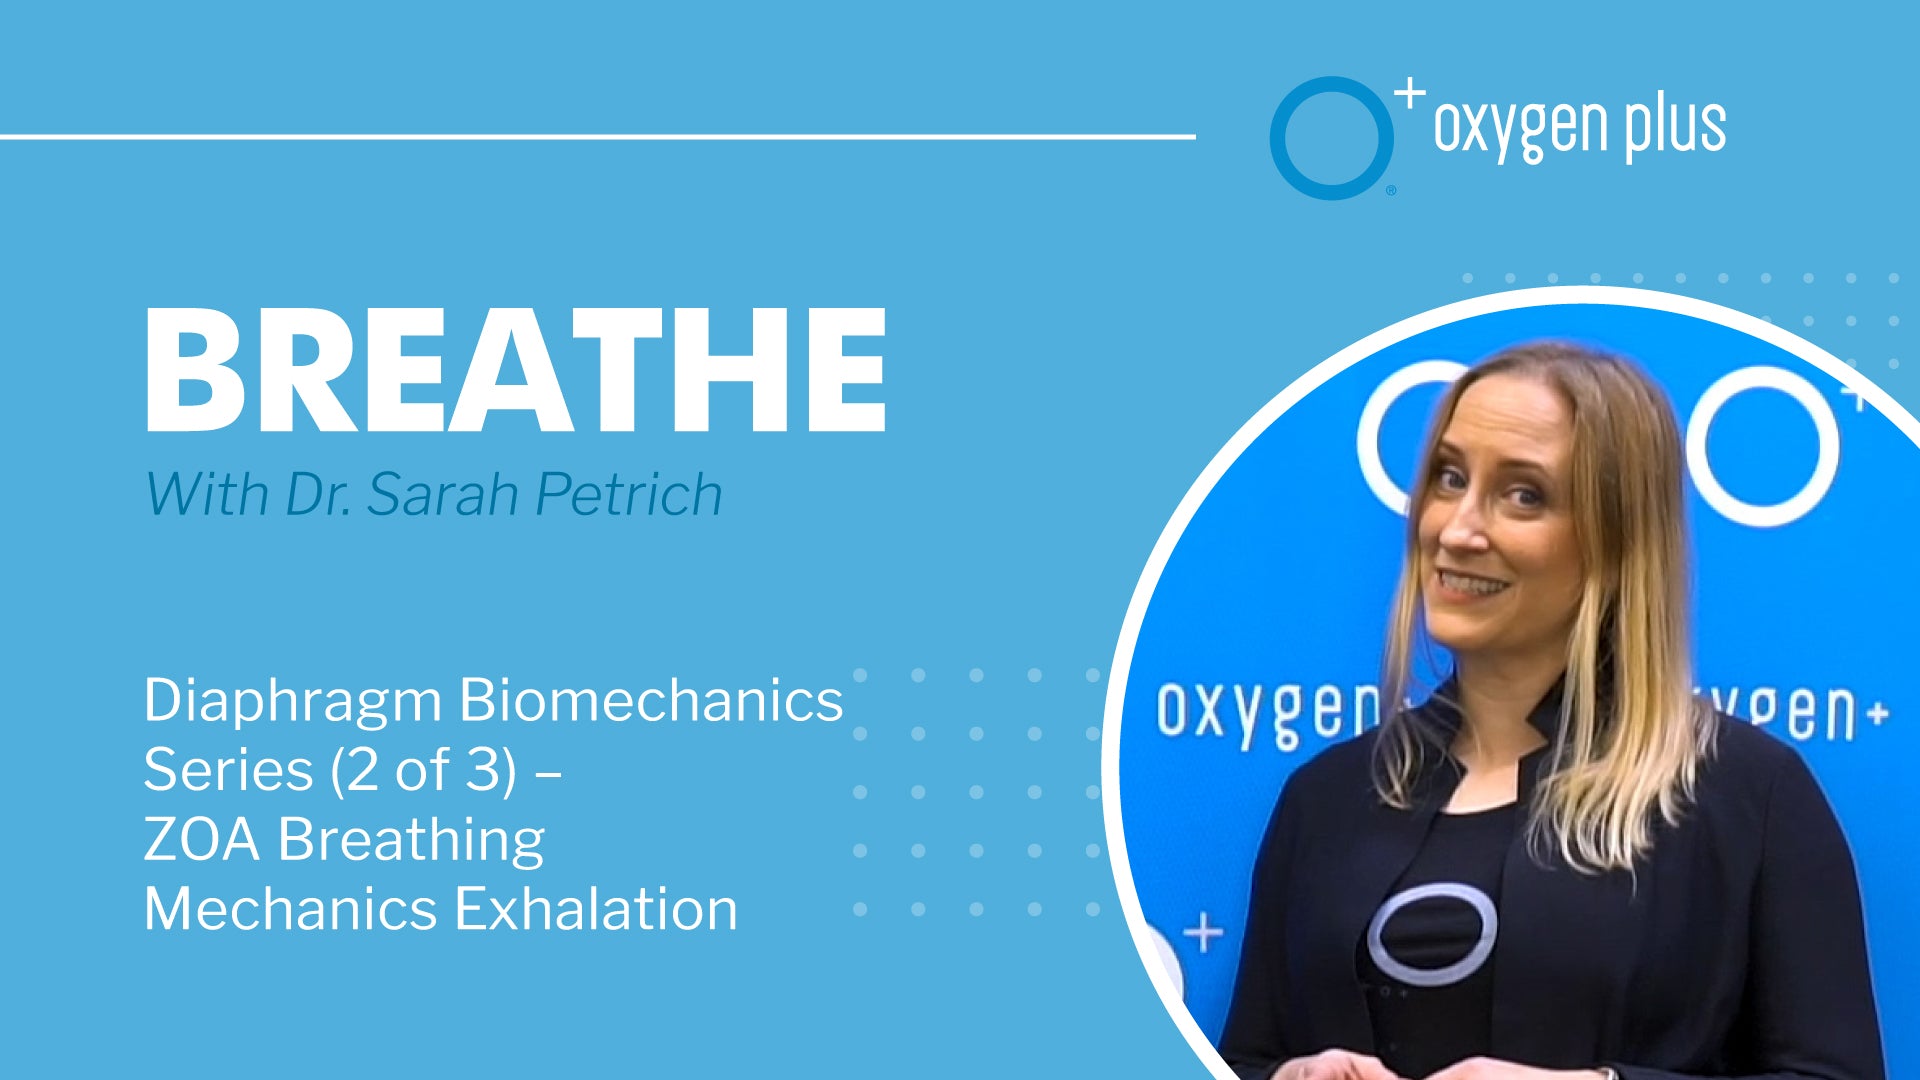 Diaphragm Biomechanics Series (2 of 3): “ZOA Breathing Mechanics Exhalation” with Dr. Sarah Petrich